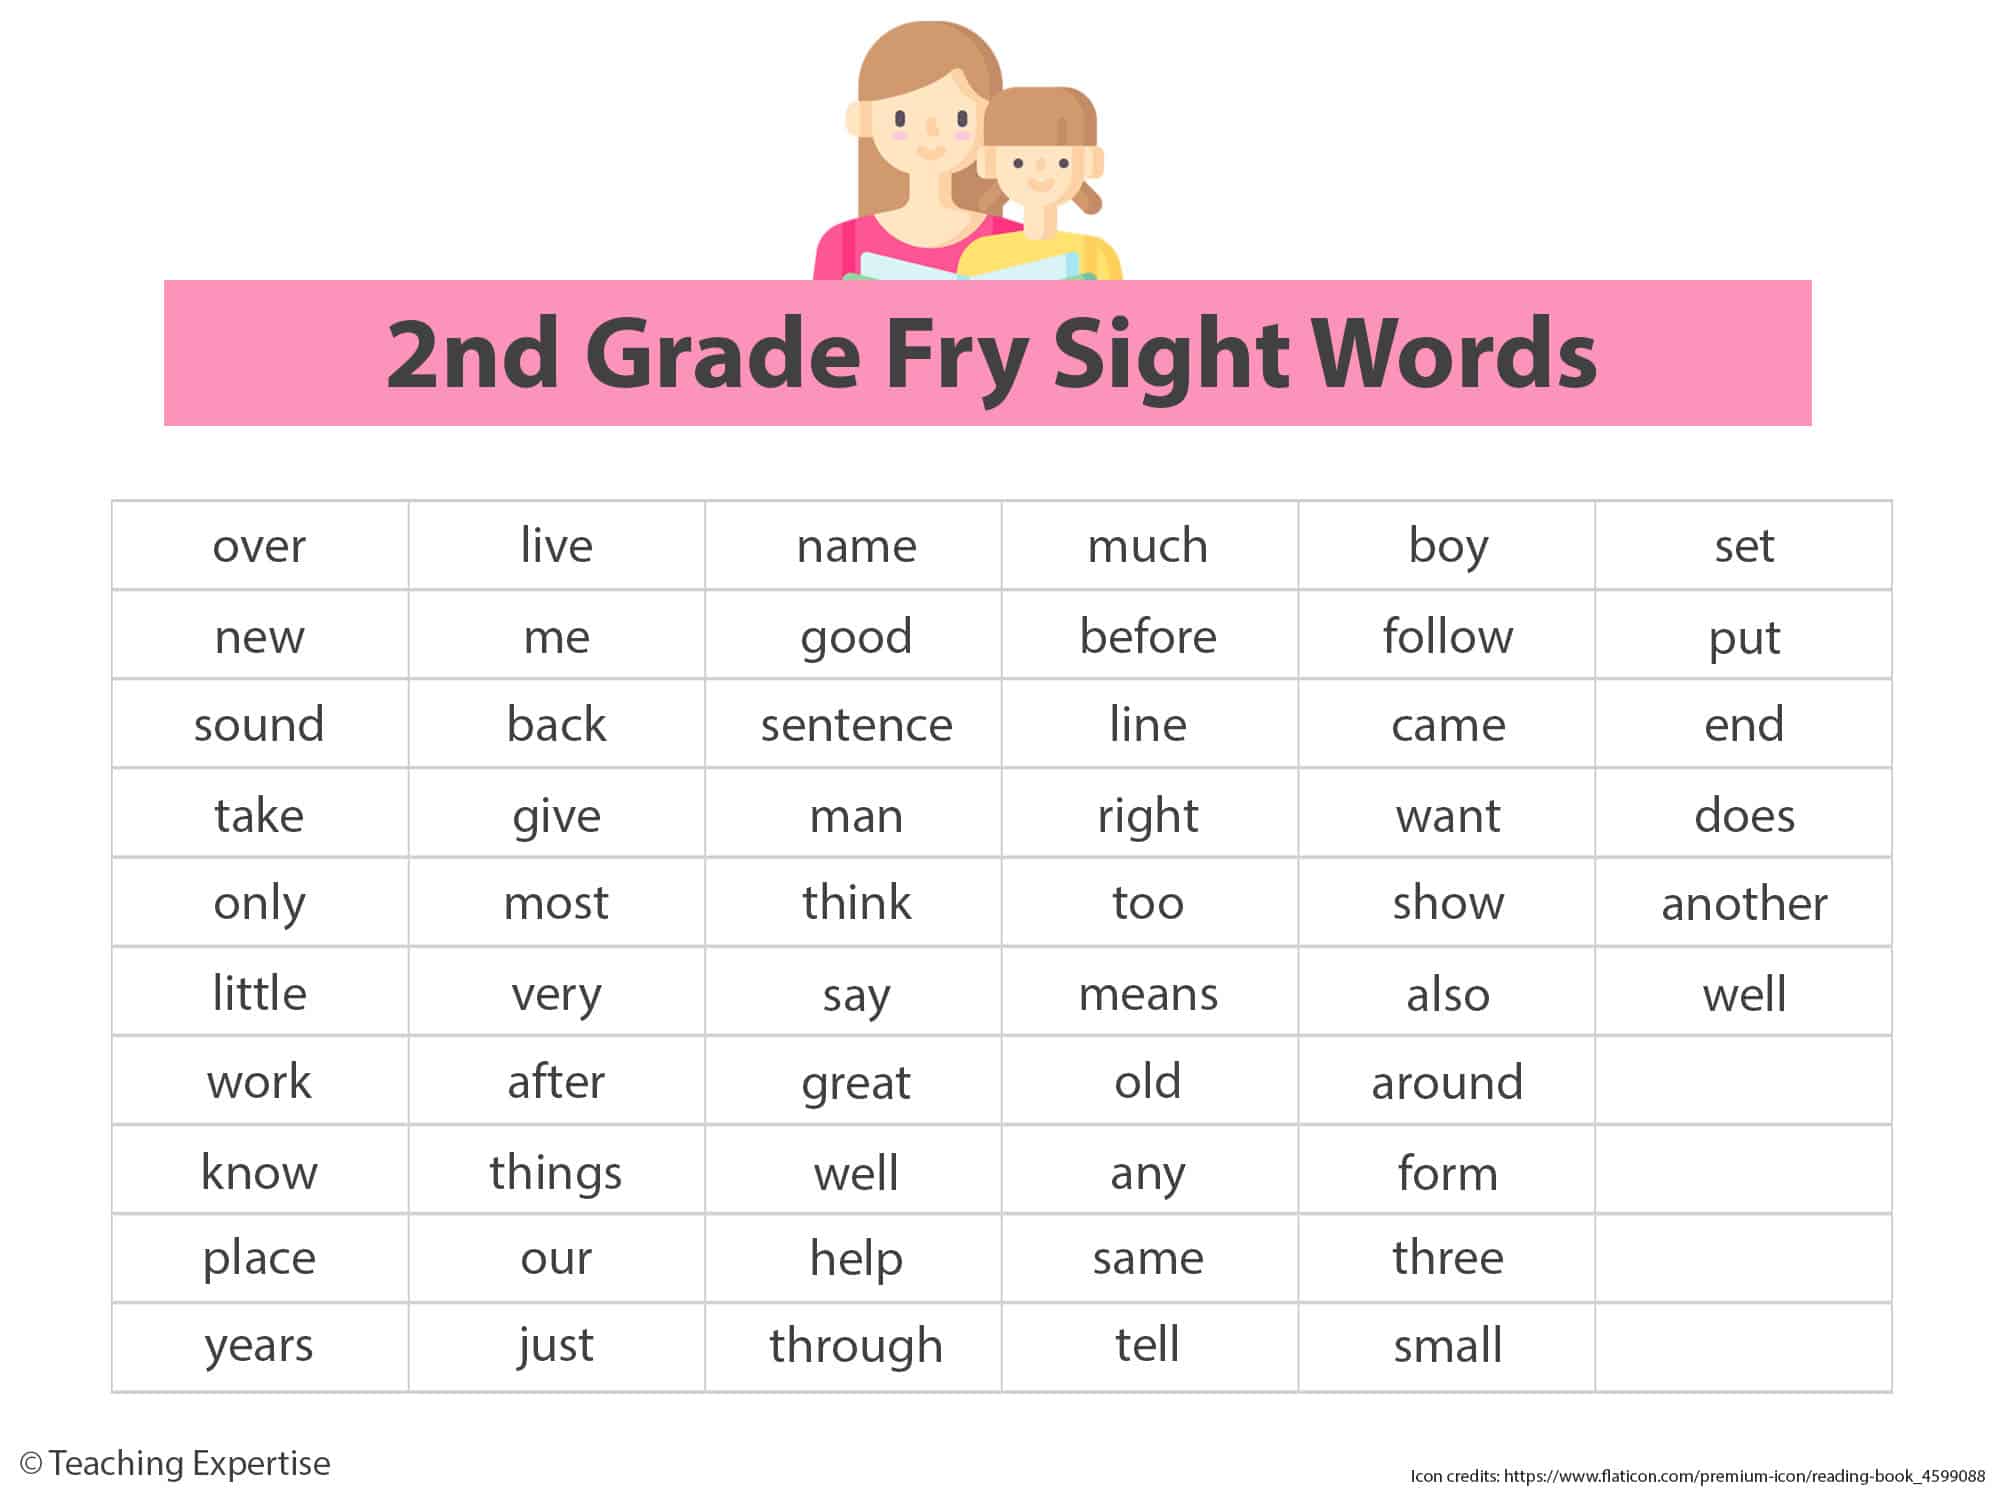 2nd grade fry sight words